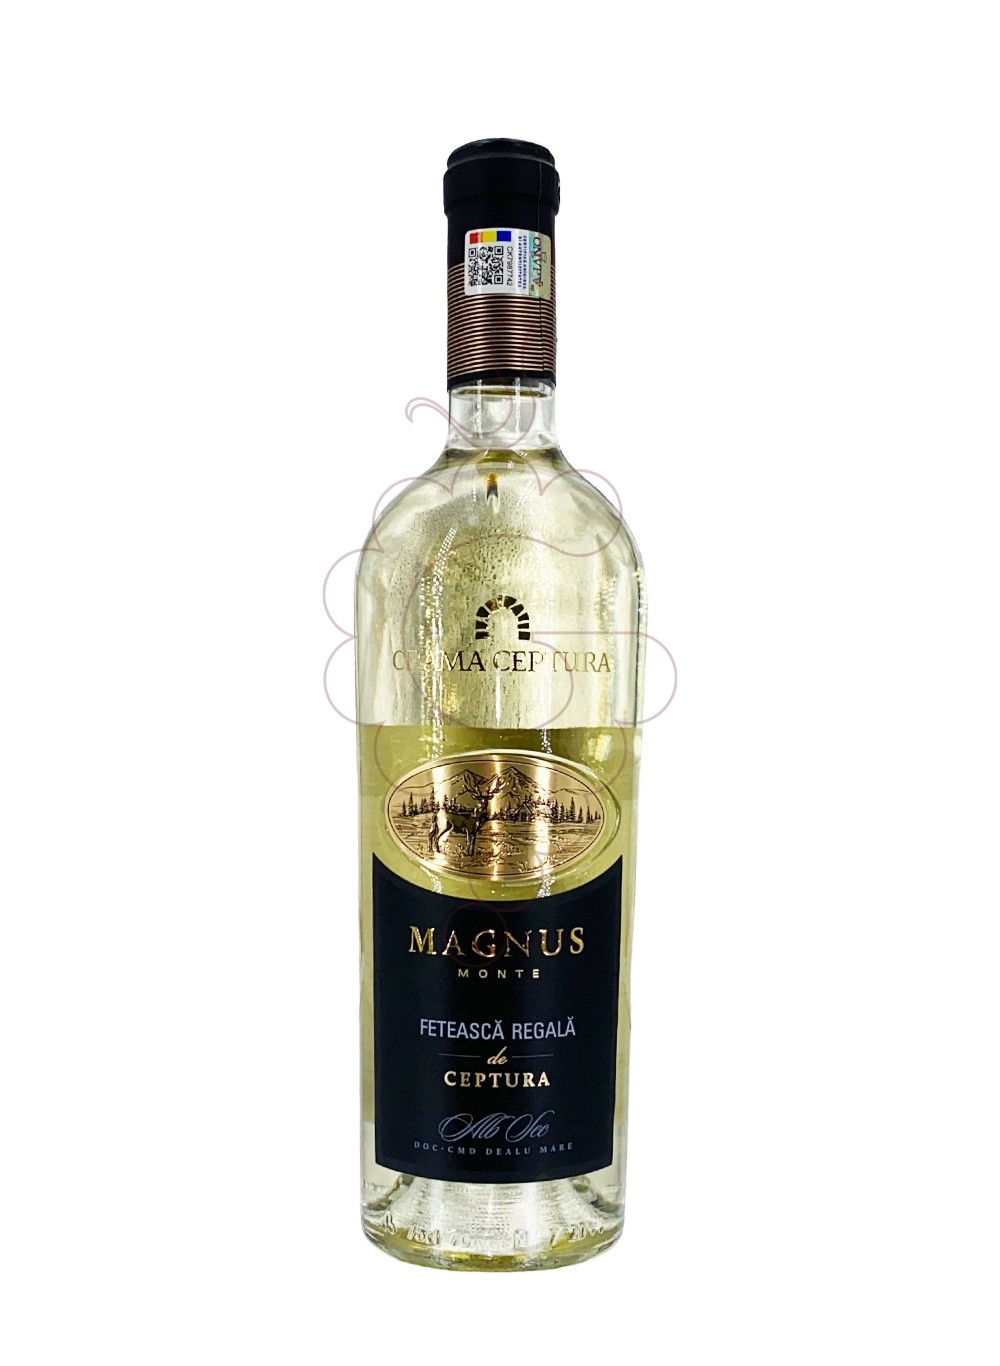 Photo Crama Ceptura Cervus Magnus Monte Feteasca Regala vin blanc